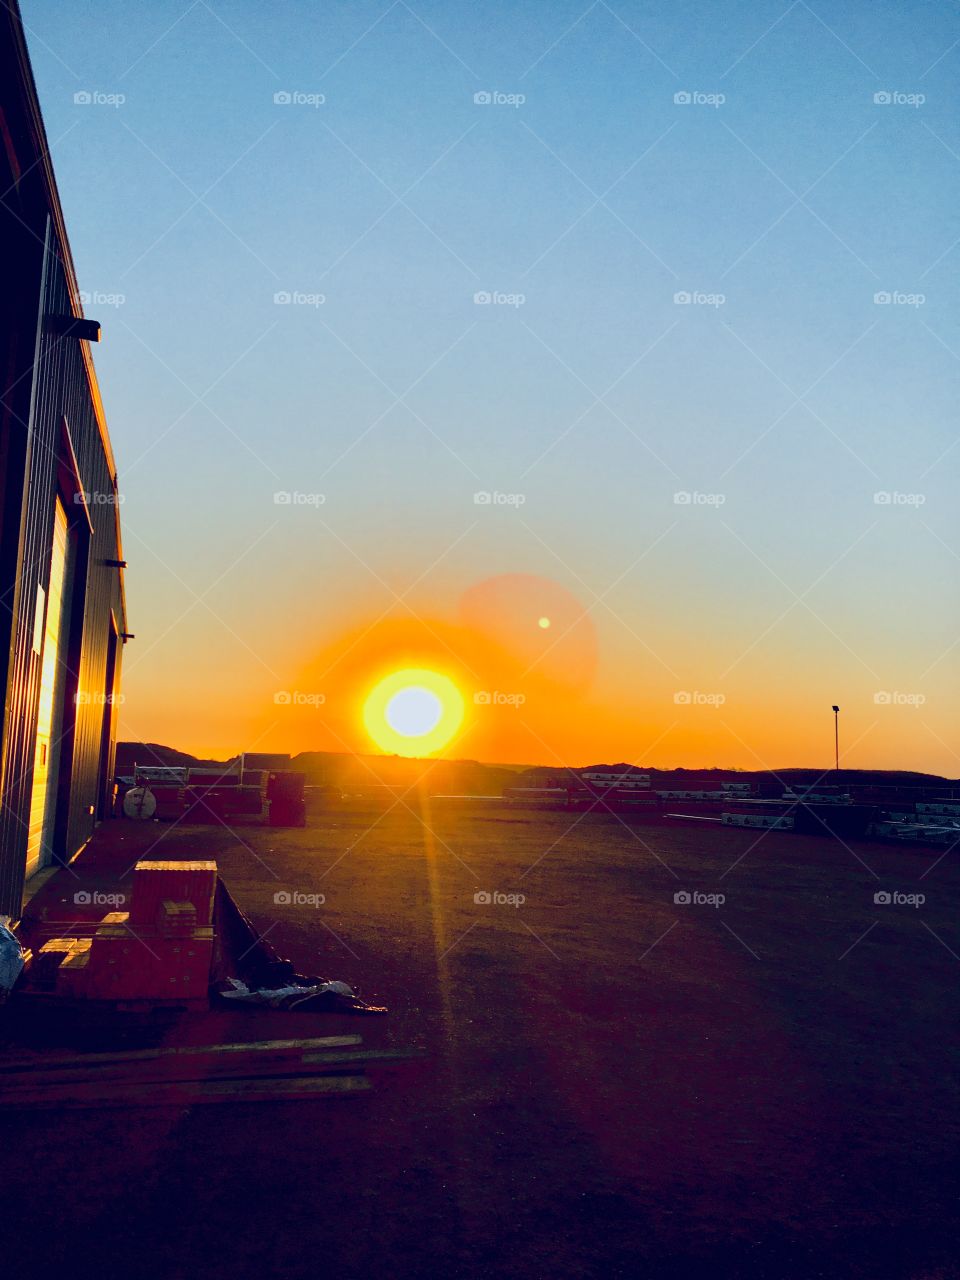 Alberta sun rise 